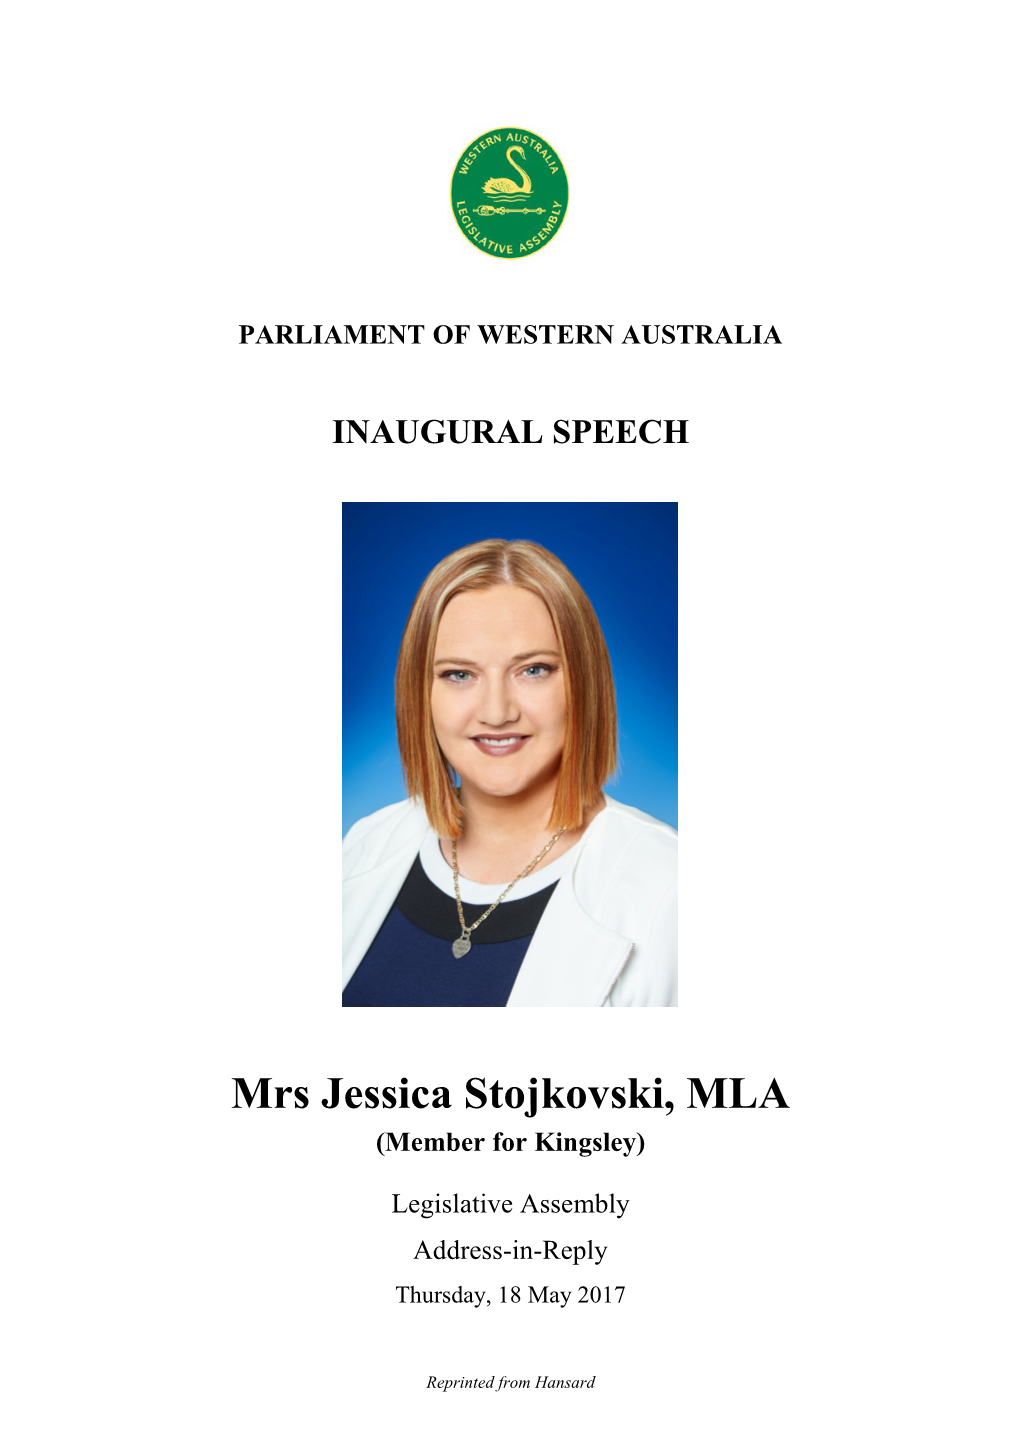 Mrs Jessica Stojkovski, MLA (Member for Kingsley)